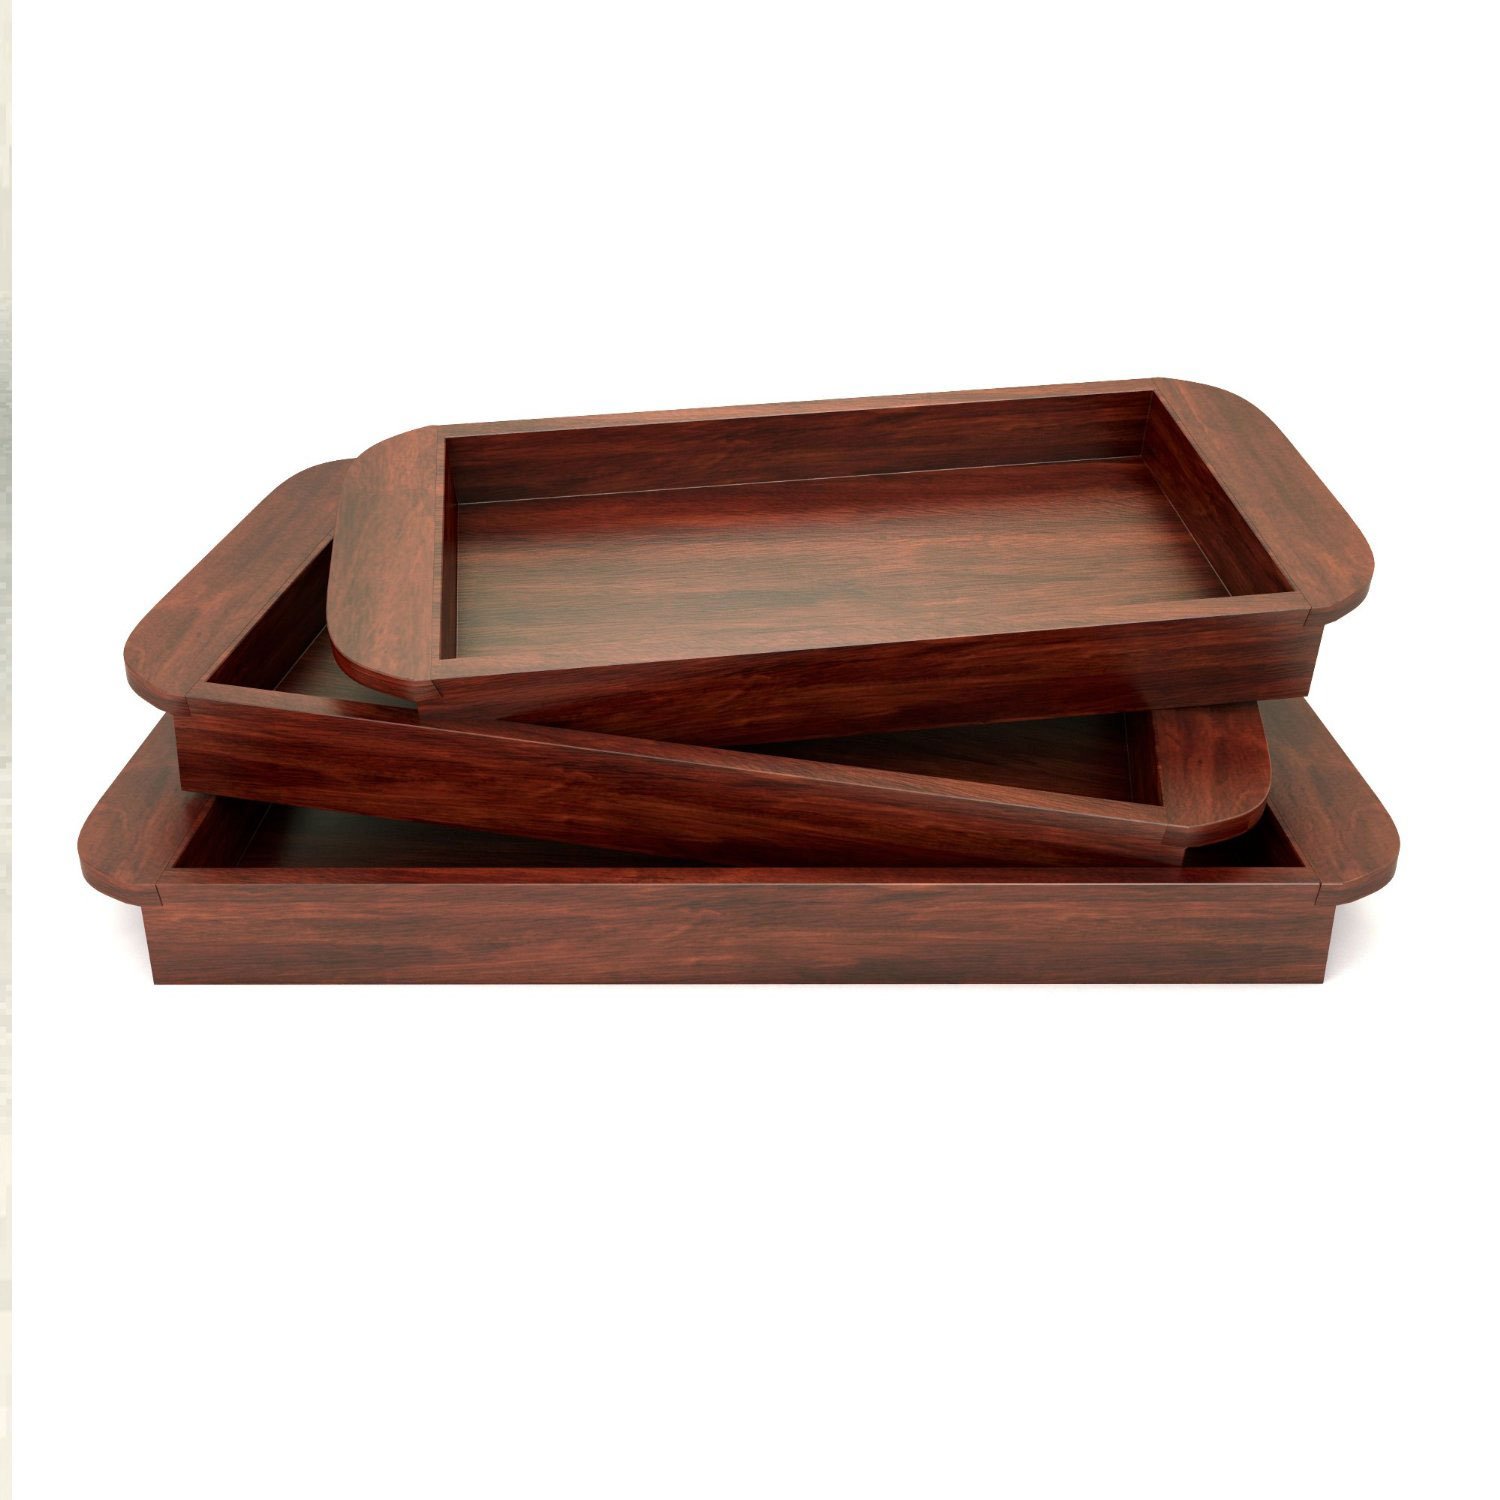 Solid Wood Serving Tray Set of 3 U Shape Trays With Handles – Mahogany Finish